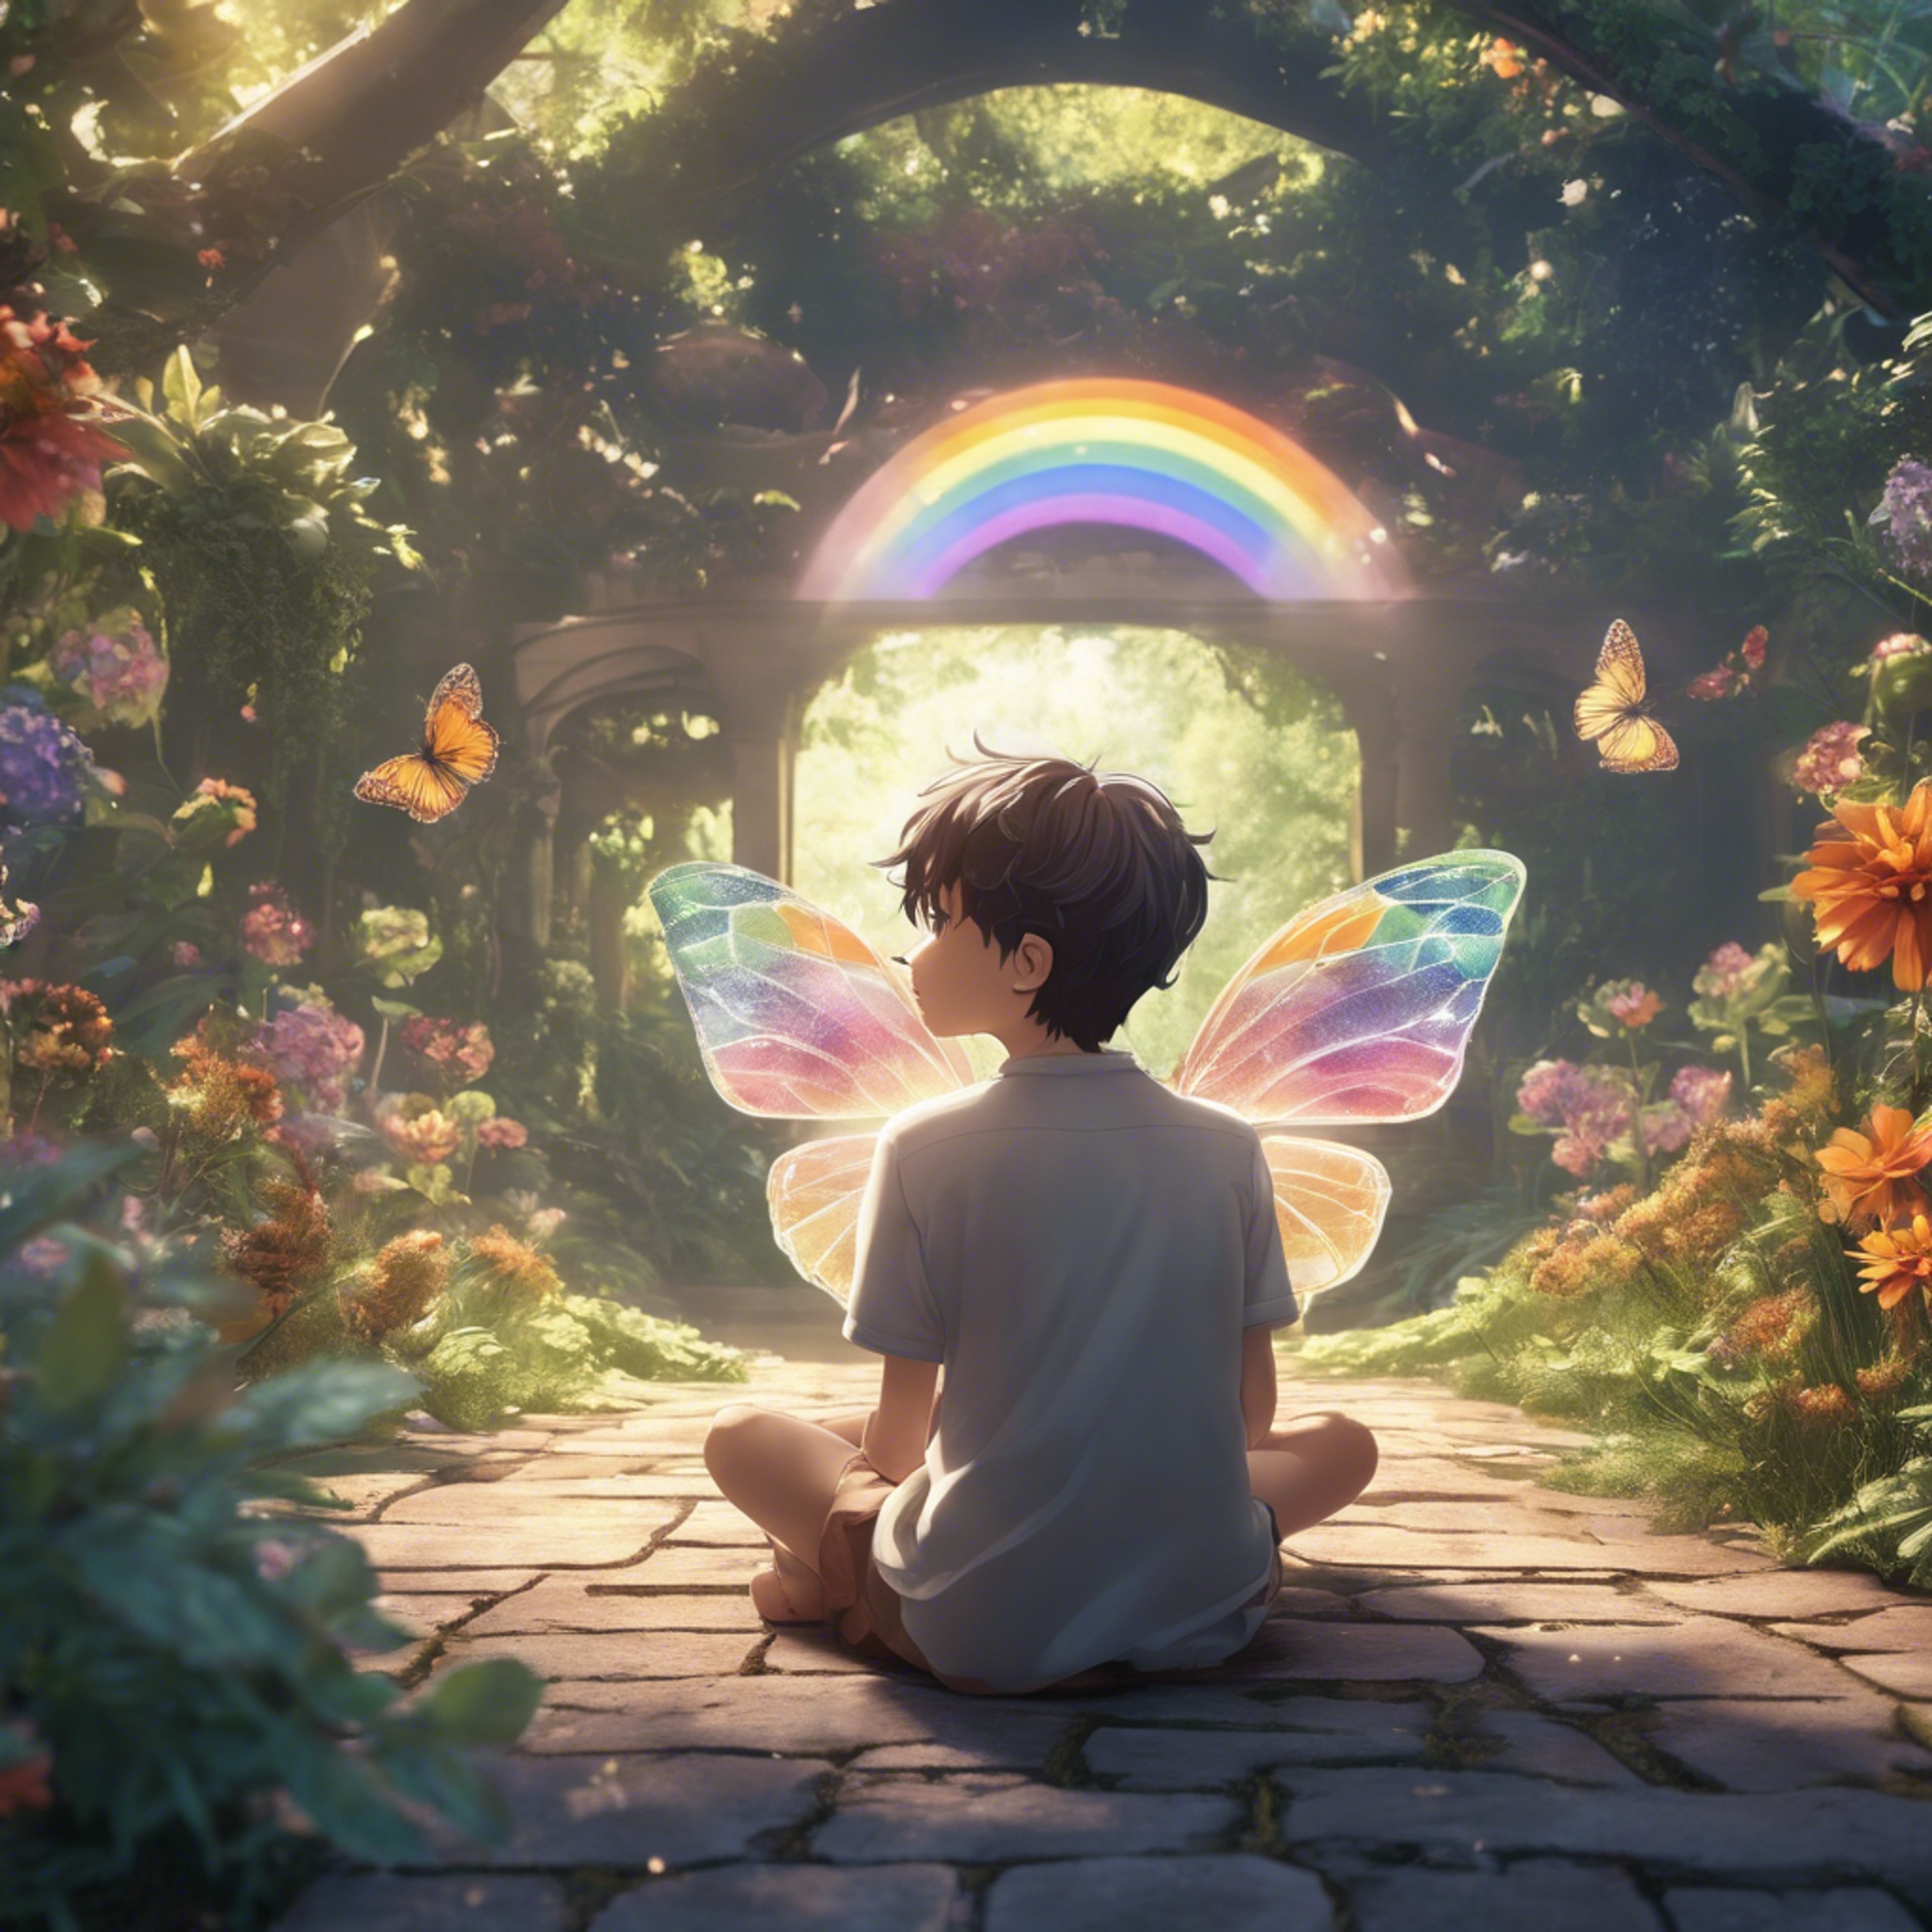 An innocent anime boy with rainbow wings gazing at a butterfly in a hidden garden. Tapet[04bec09c0c034ff9b0e5]